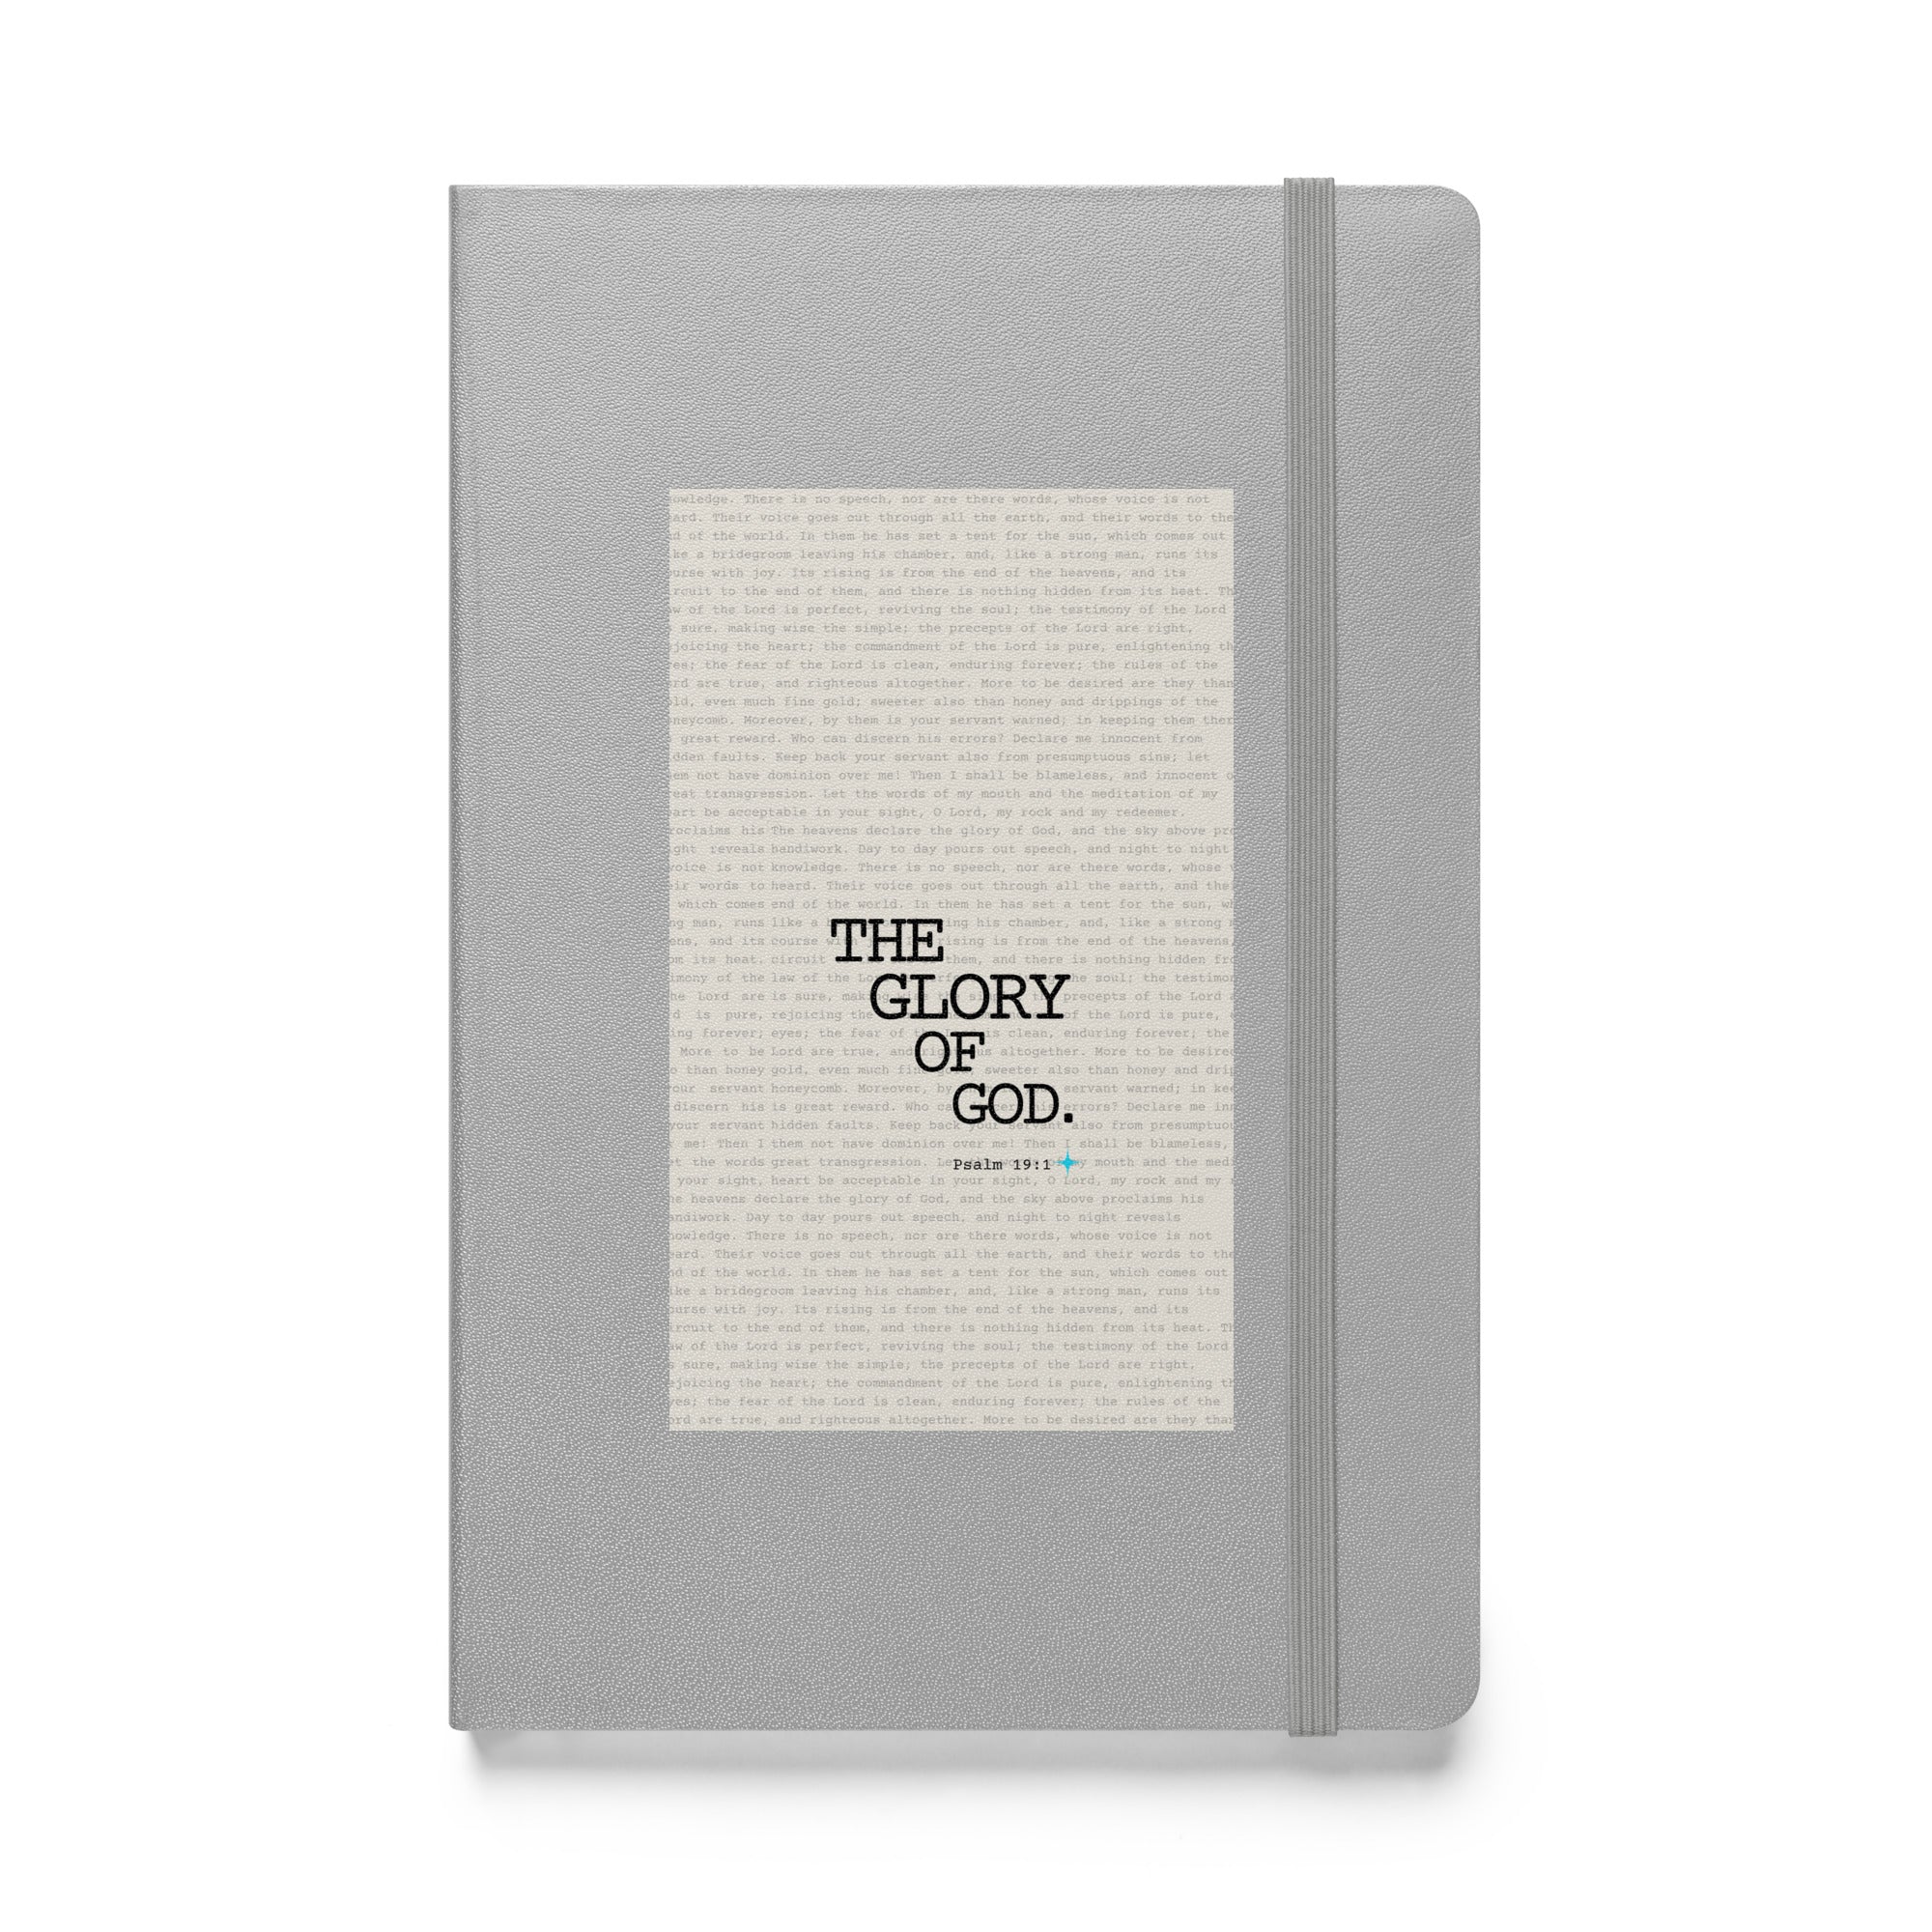 Hardcover bound notebook - Psalm 19:1